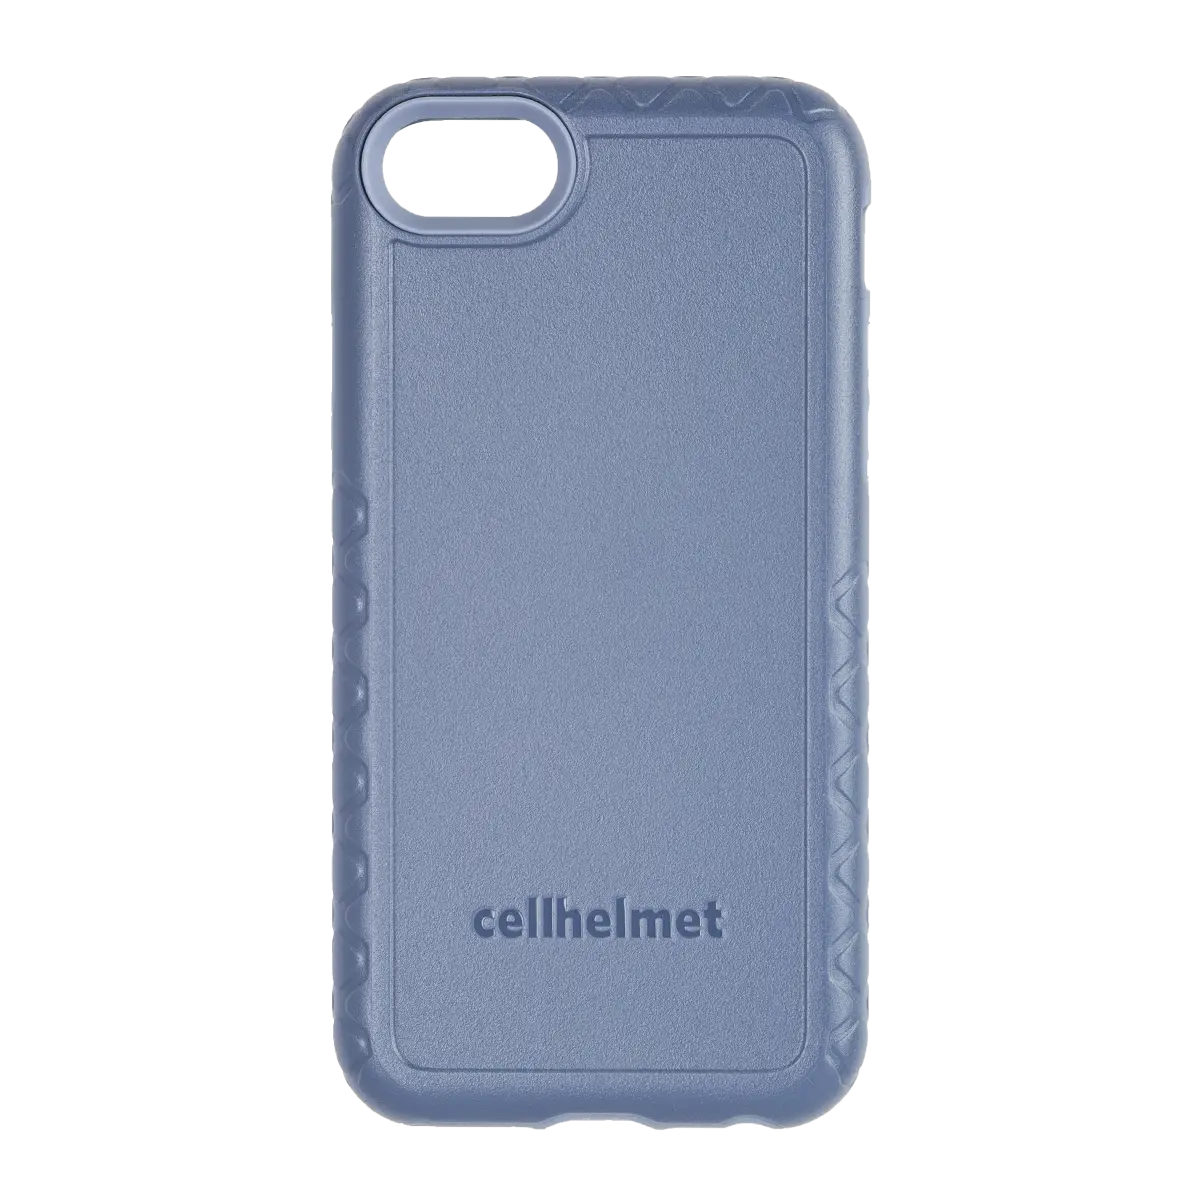 Blue cellhelmet Customizable Case for iPhone SE 2020